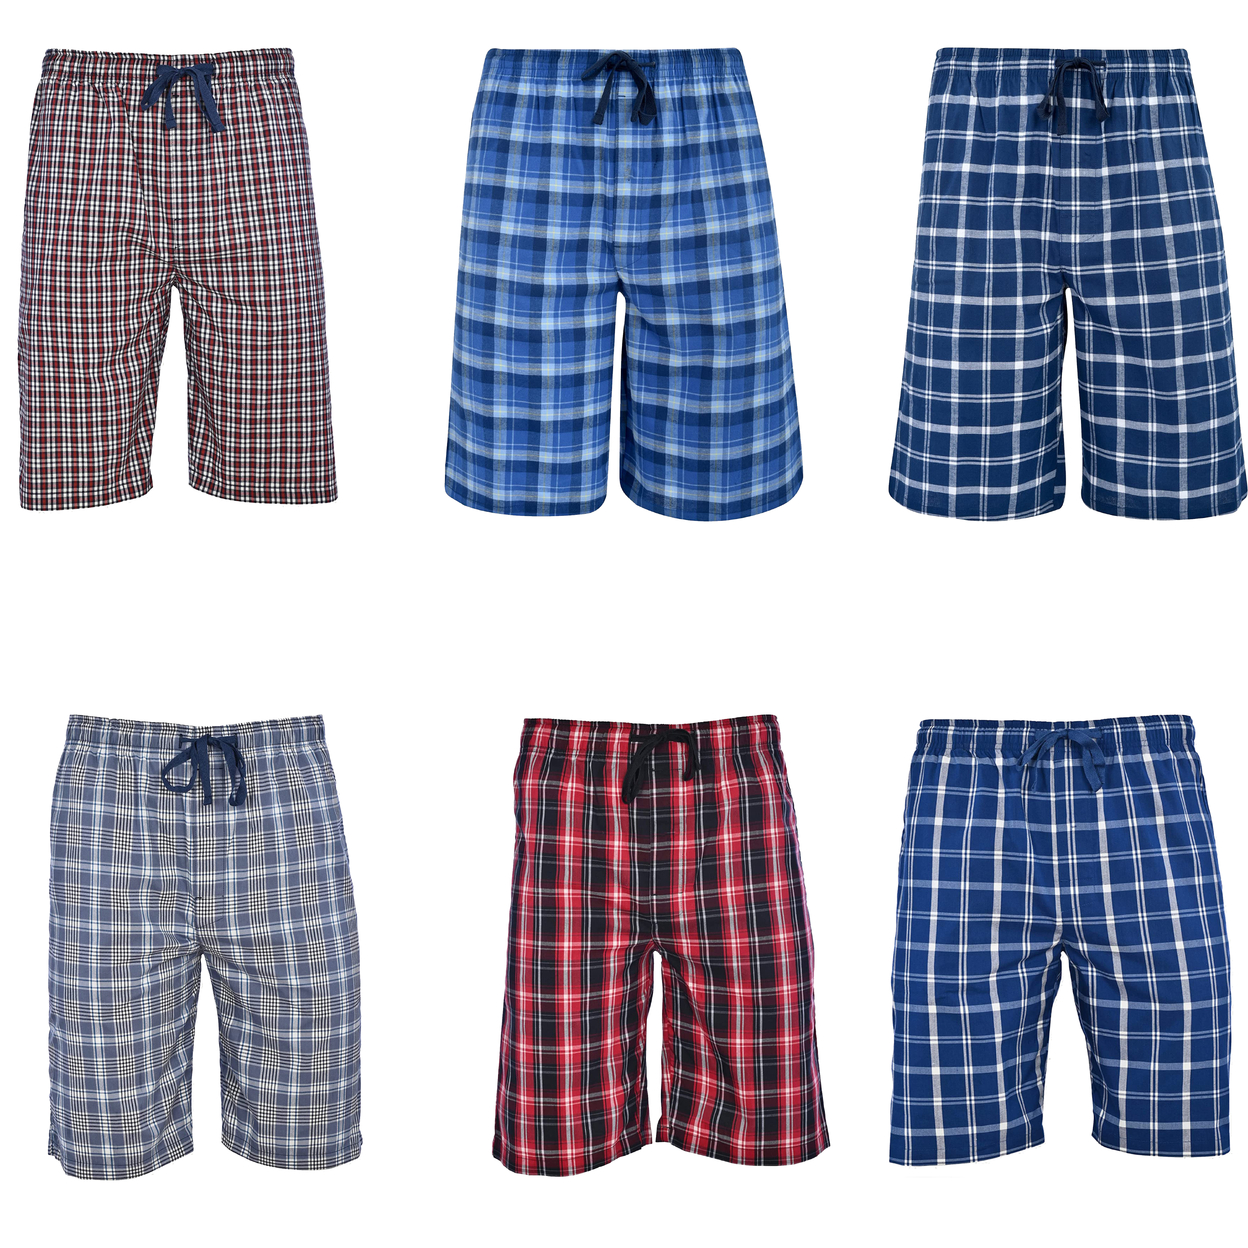 Men's Ultra-Soft Plaid Lounge Pajama Sleep Wear Shorts - Tan, Small